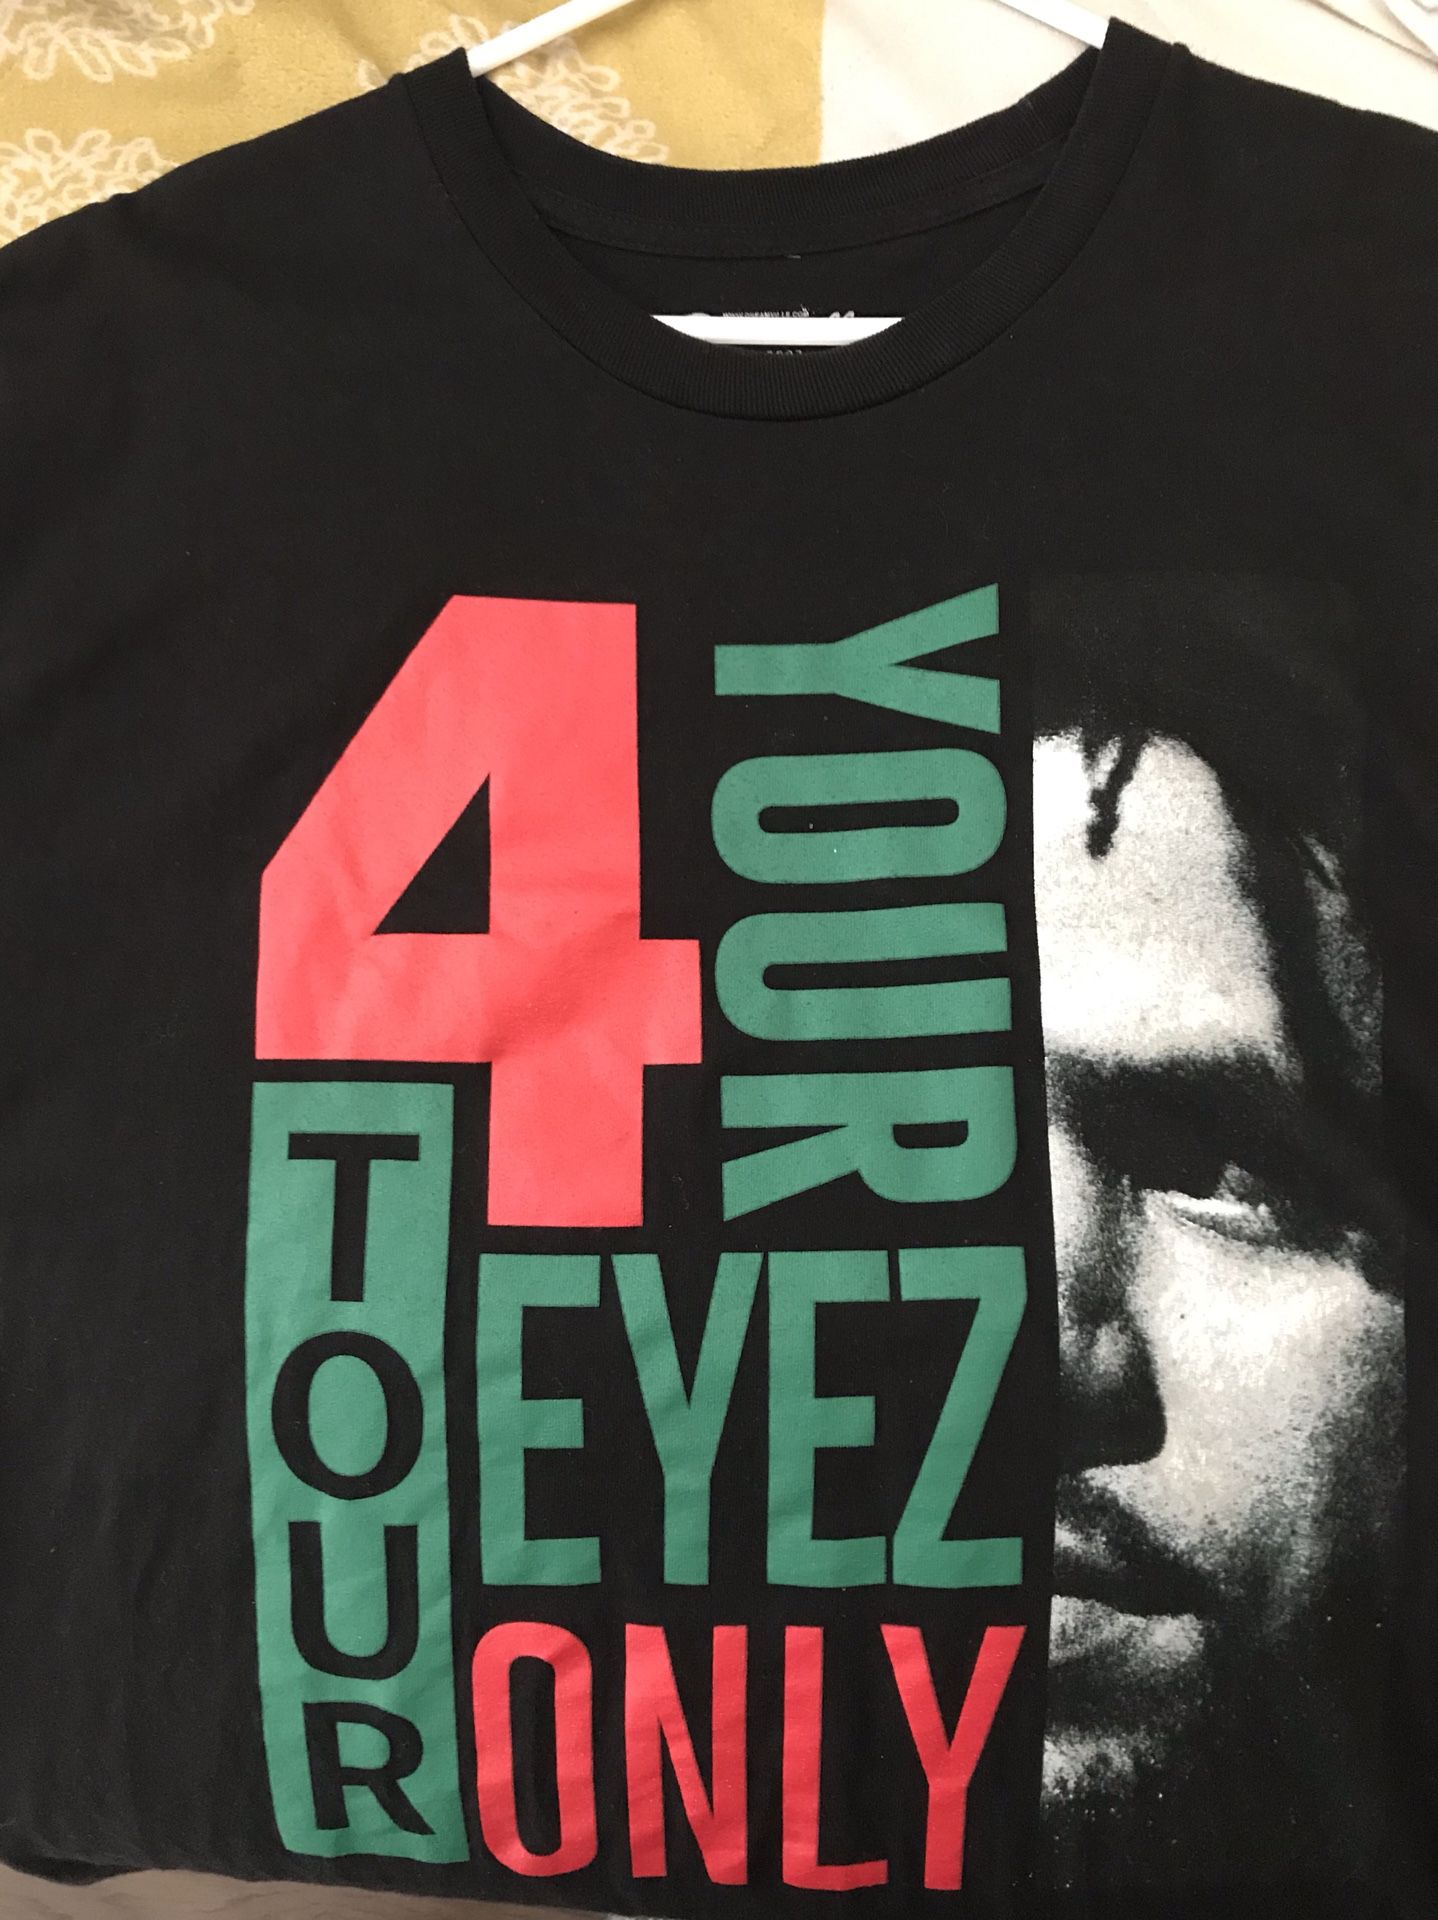 J. Cole 4 Your Eyez Only Tour Shirt